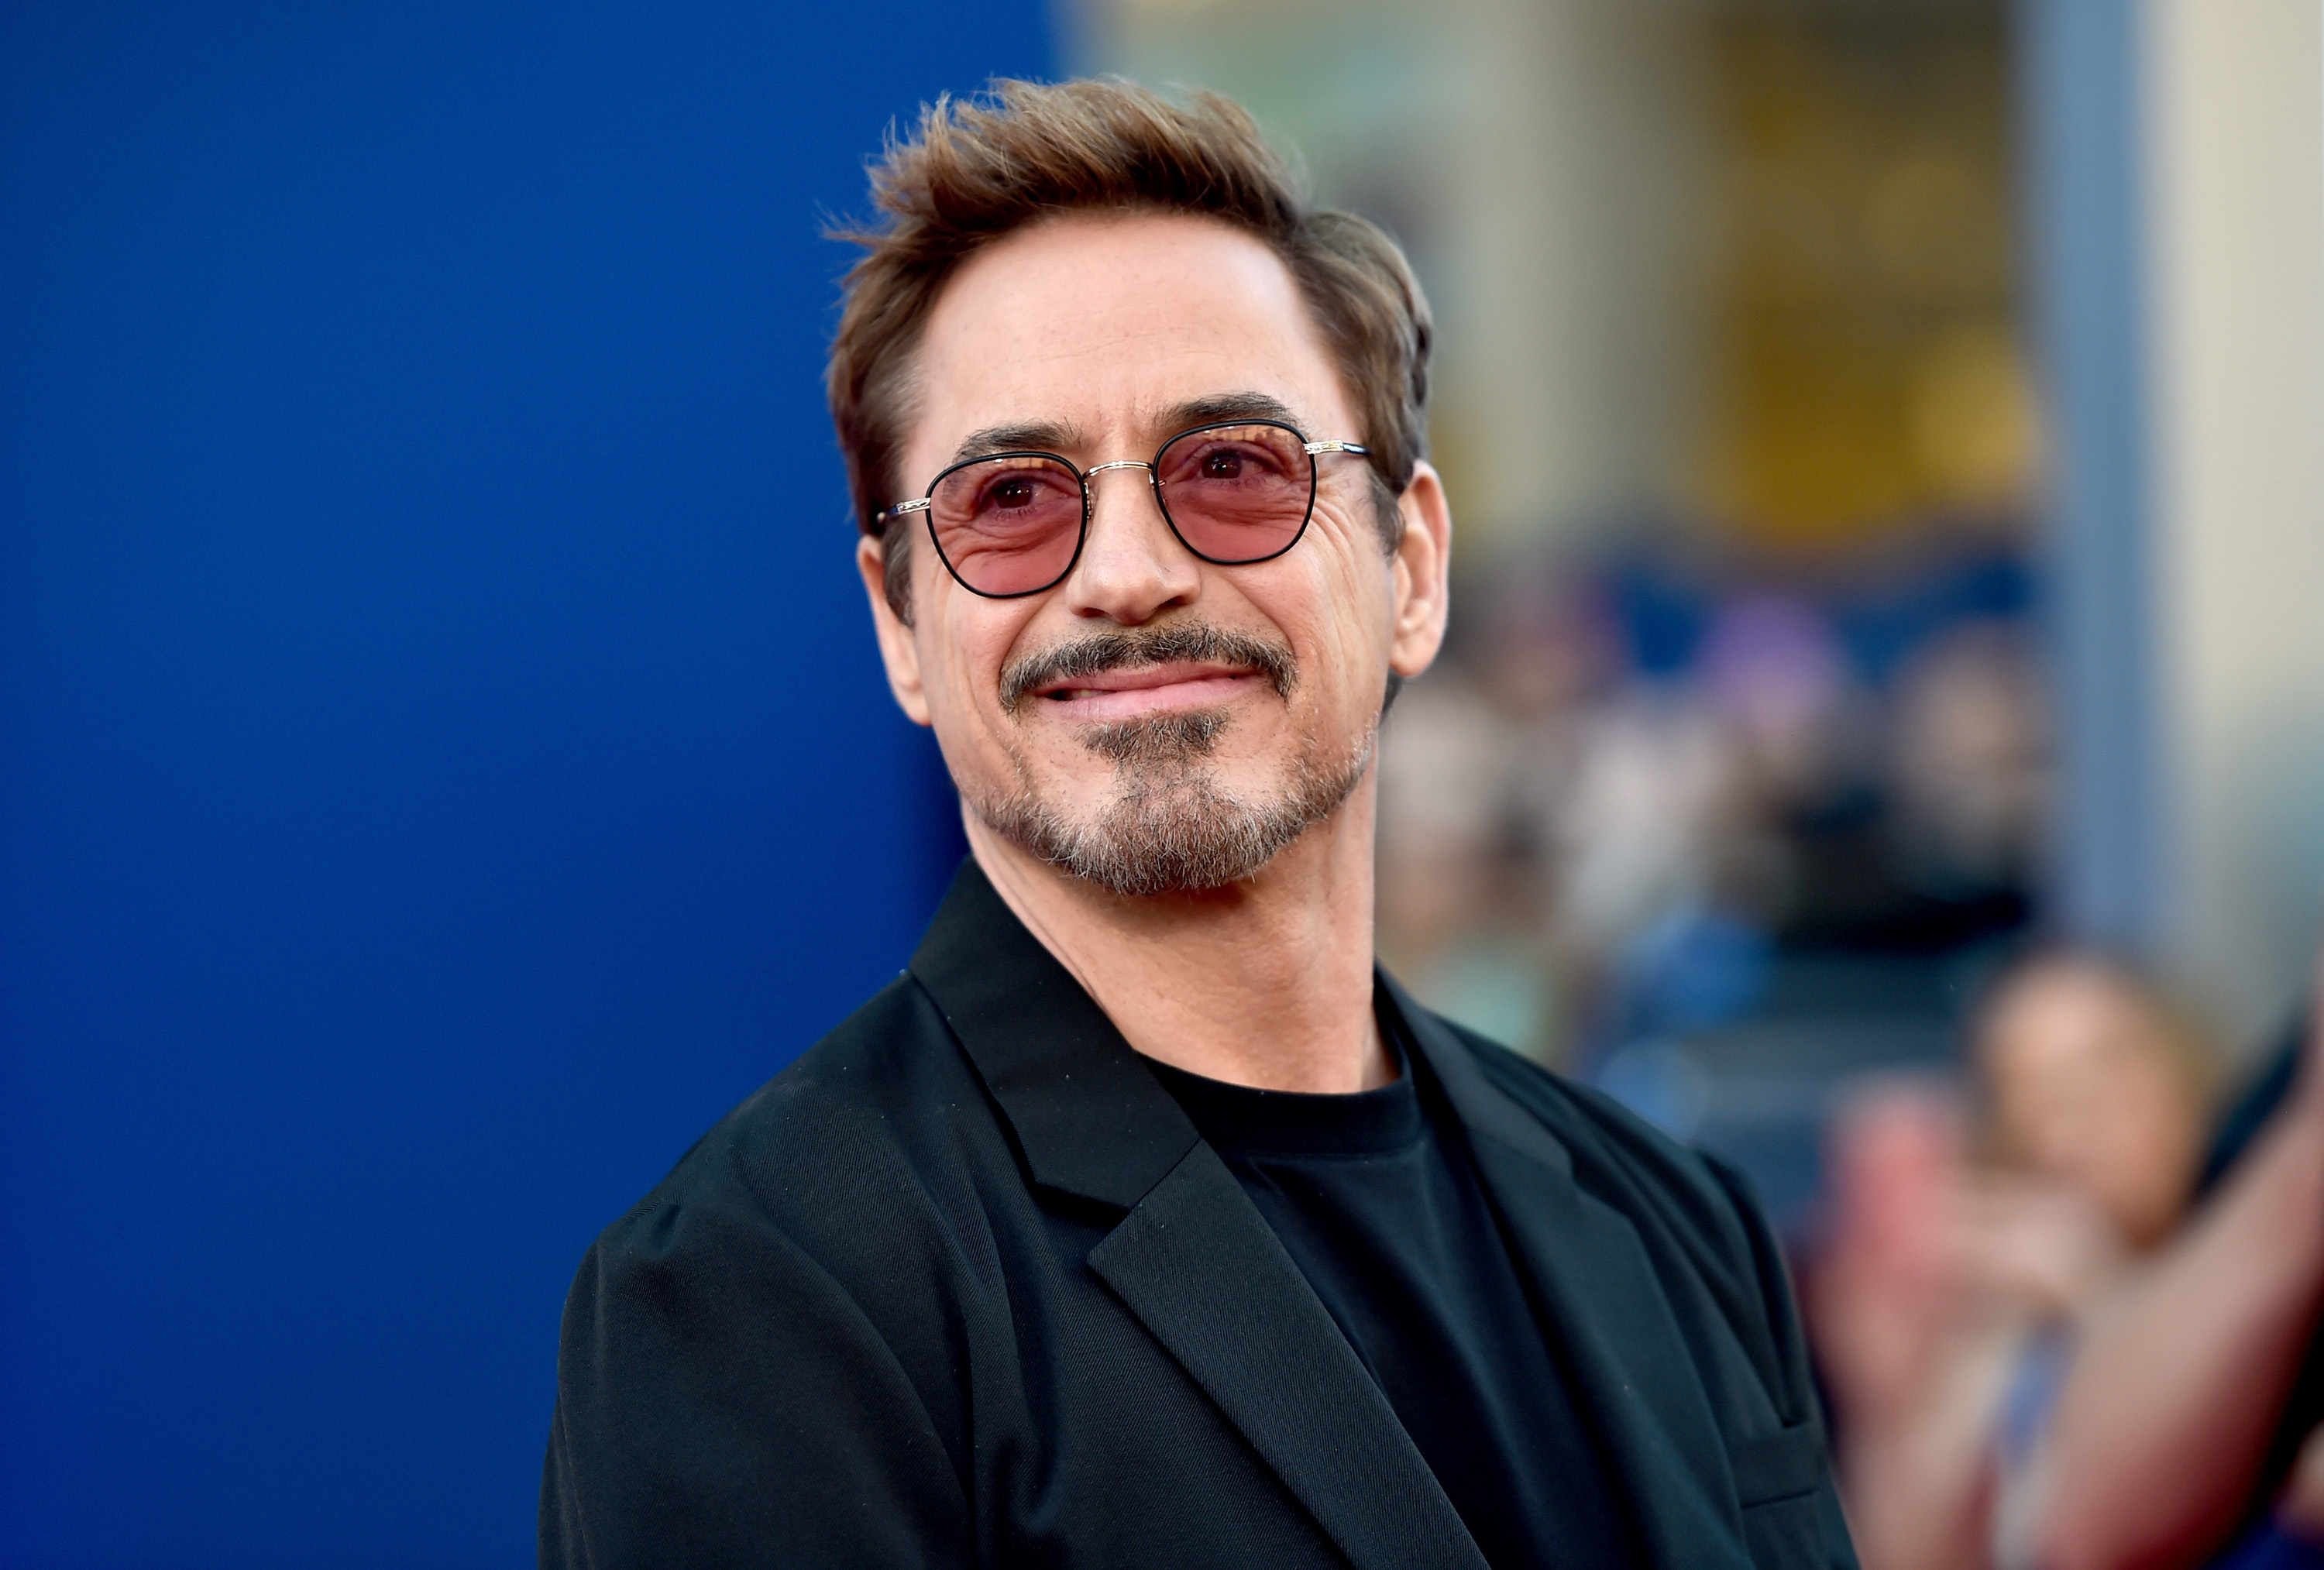 Robert Downey Jr. am 28. Juni 2017 in Hollywood, Kalifornien. | Quelle: Getty Images